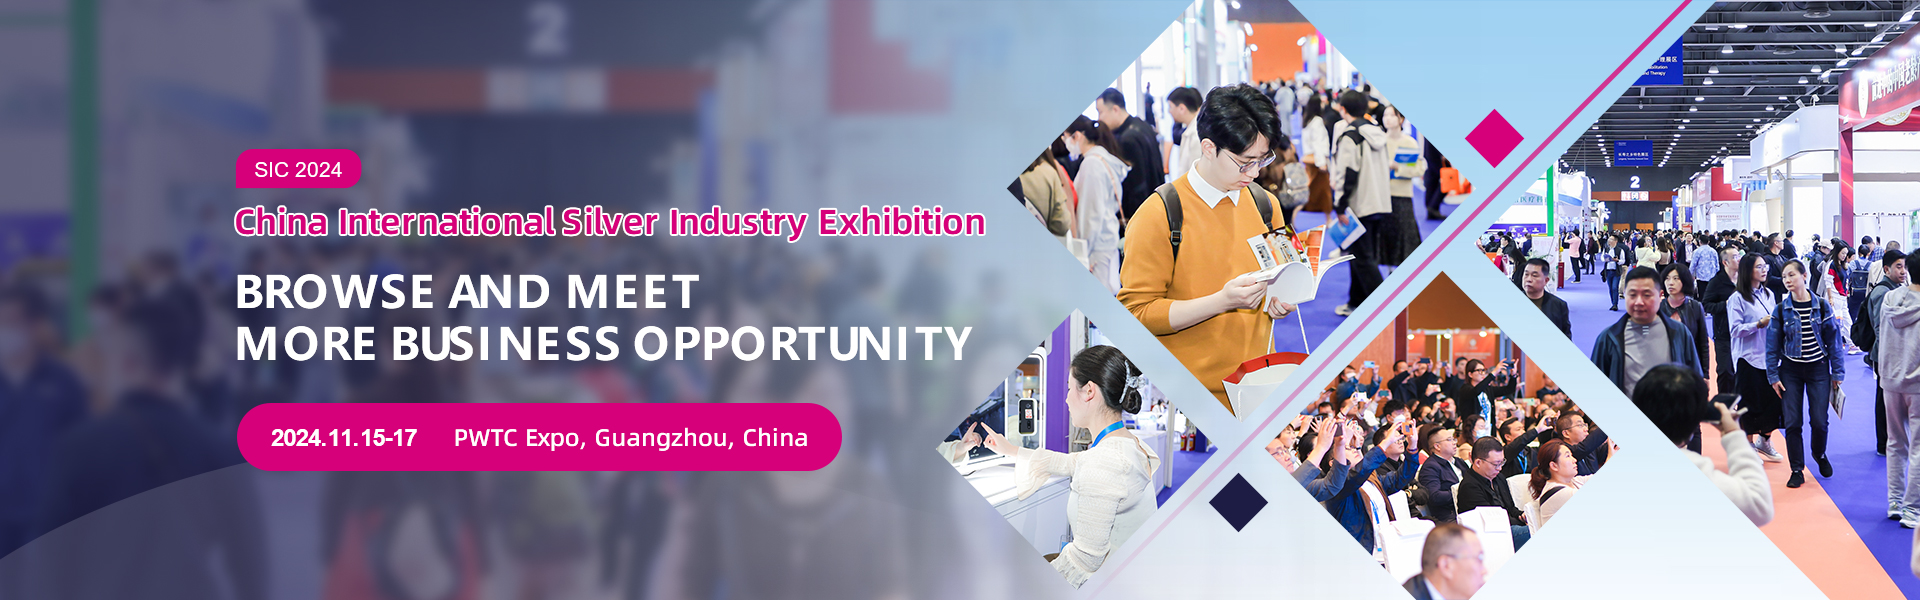 China International Silver Industry Exhibition 2024, Guangzhou, Guangdong, China